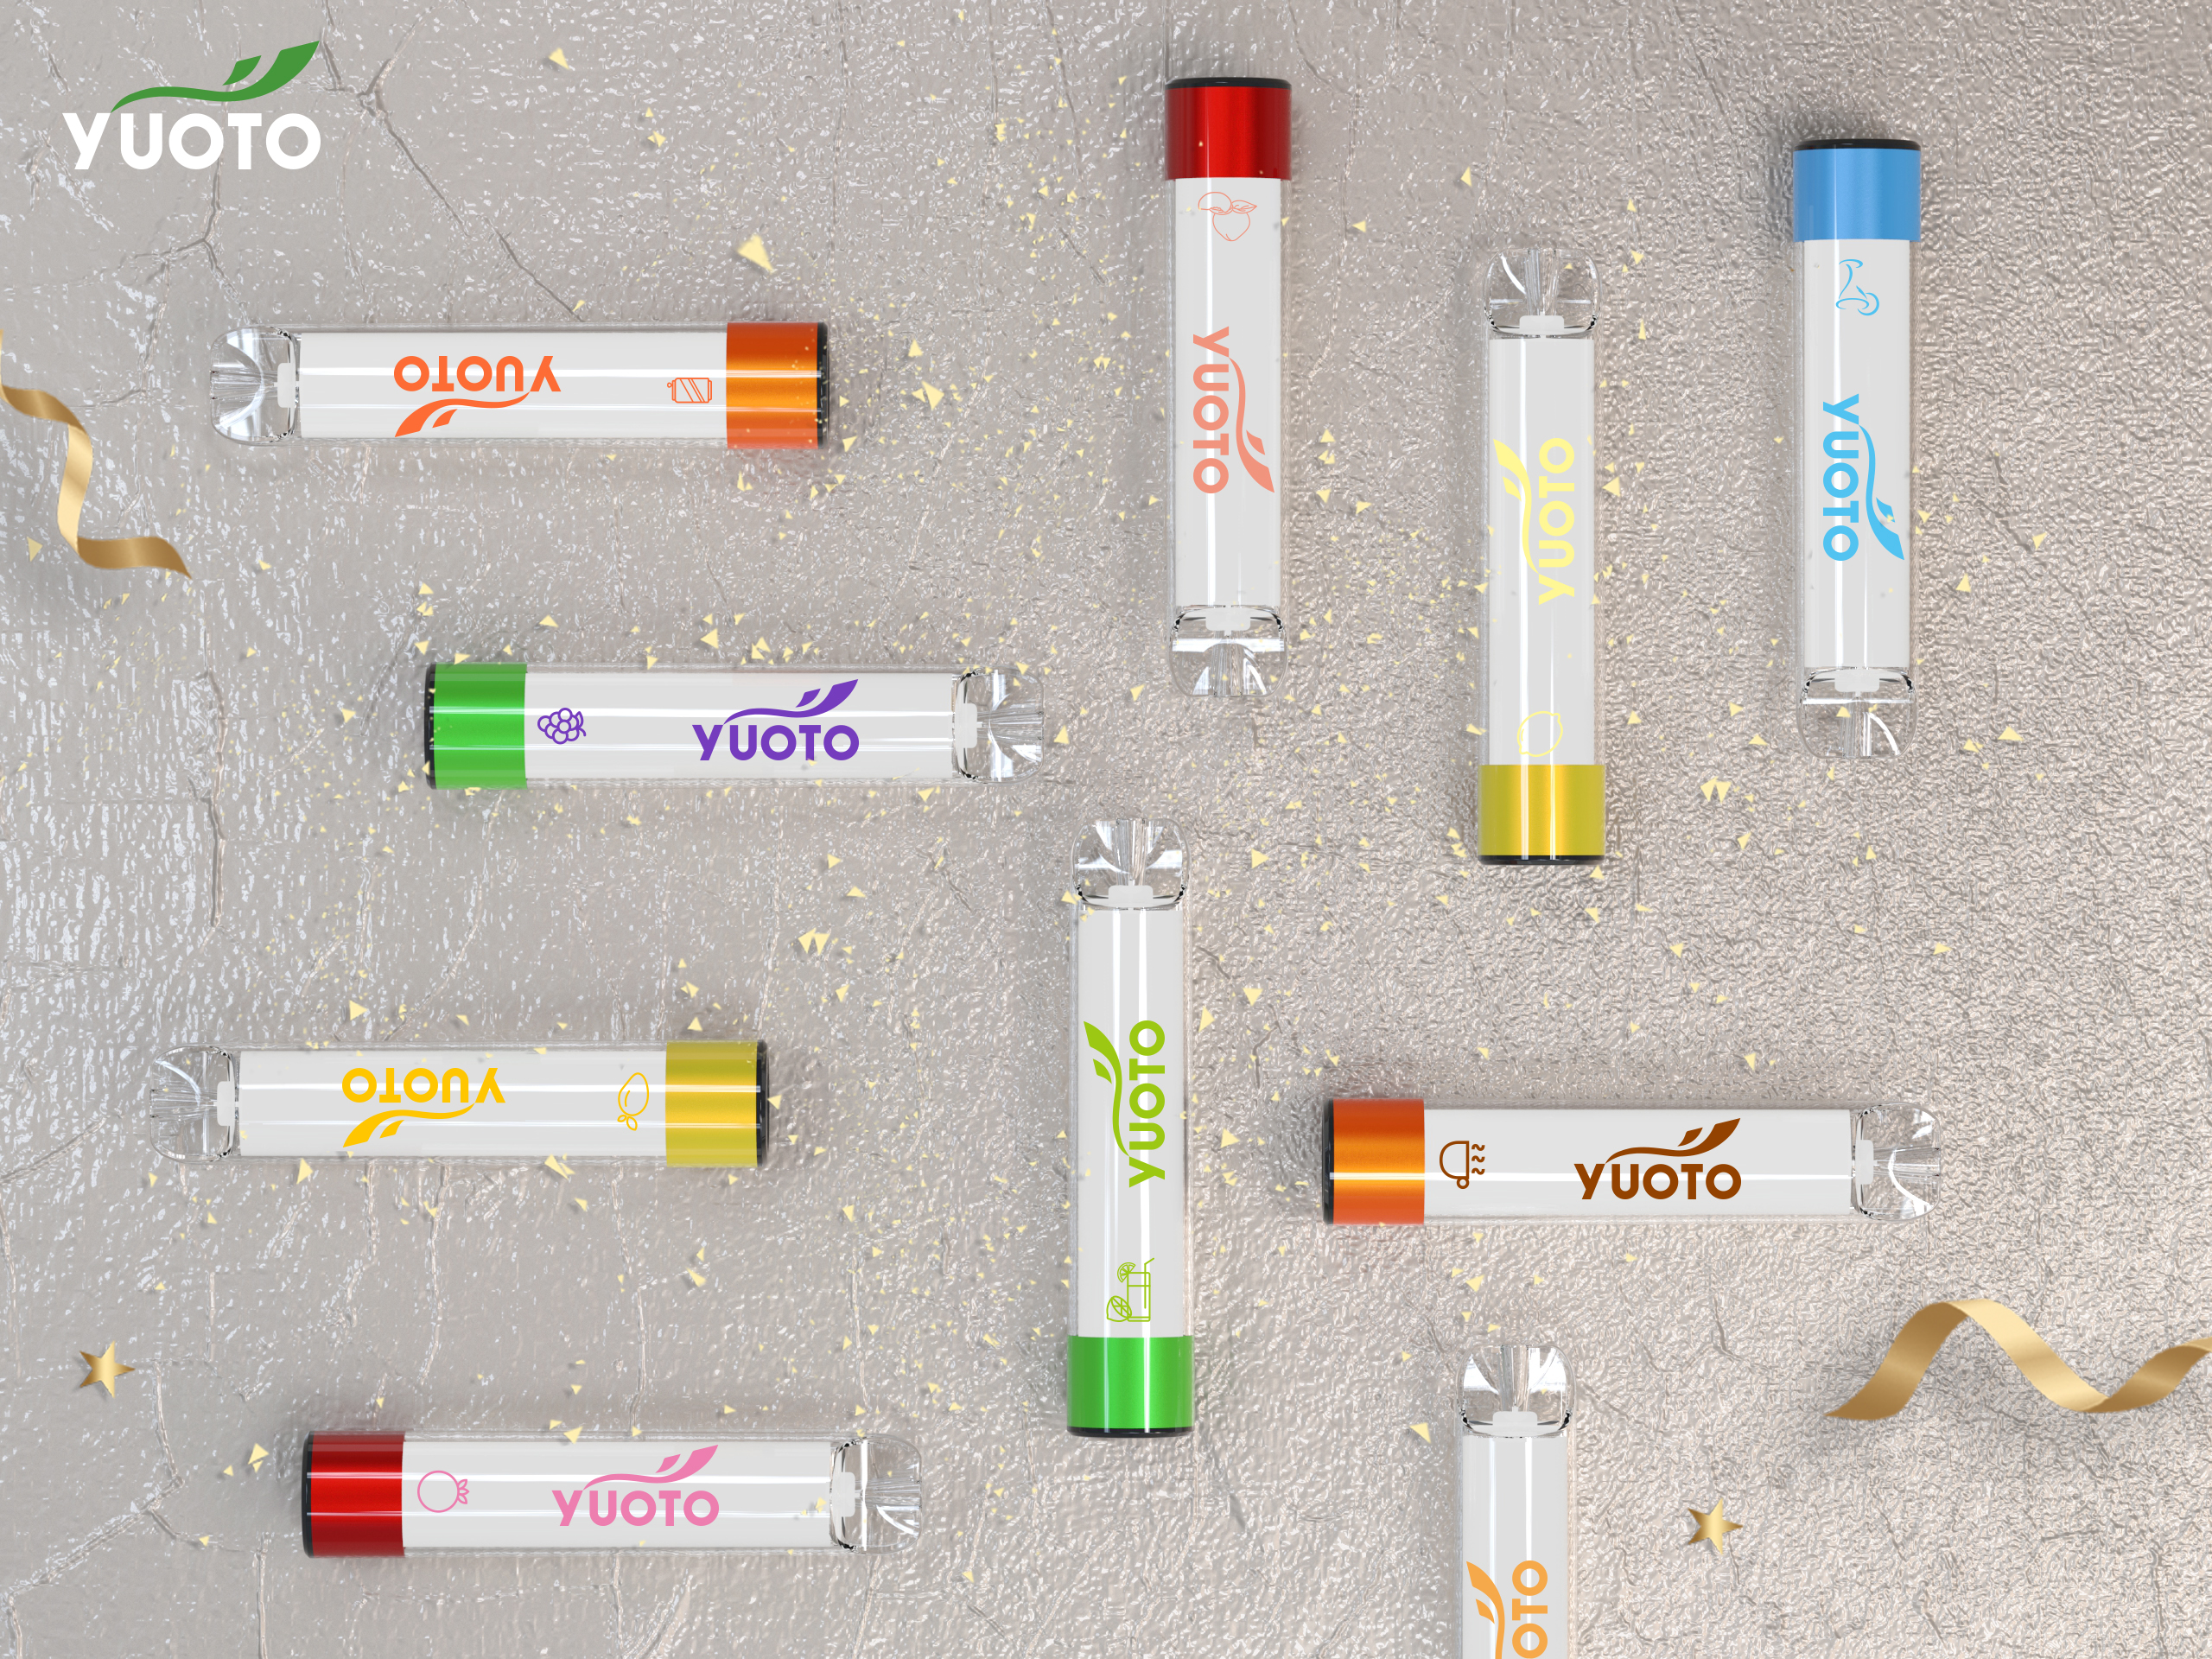 Yuoto Shine Pro Disposable flavors